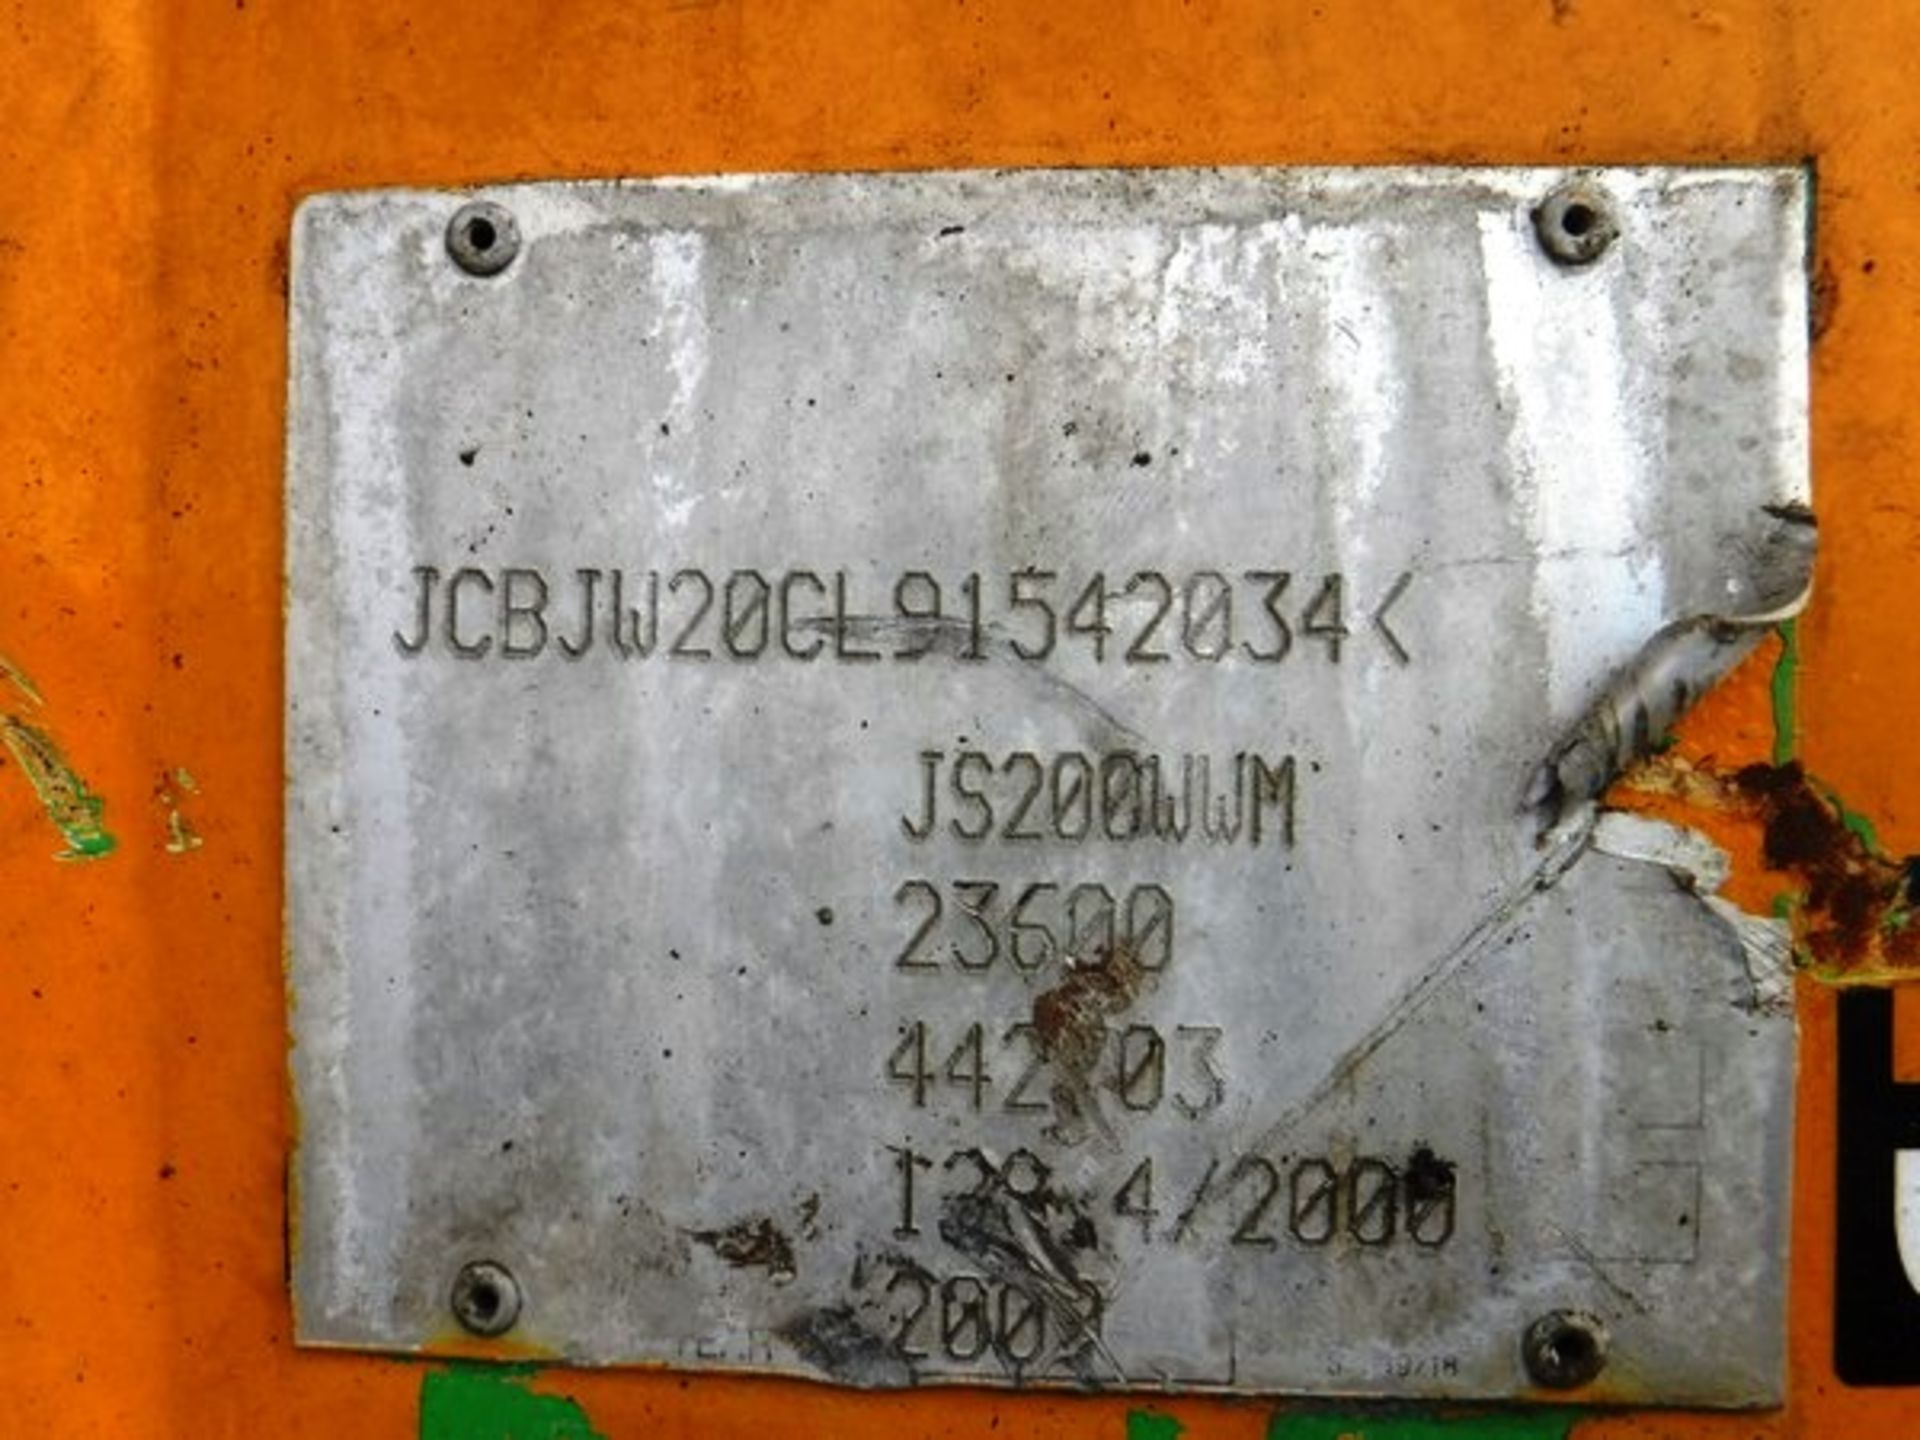 2009 JCB JS 200W wheeled excavator s/n JCBJW200L91542034. 11518hrs (not verified) - Image 15 of 15